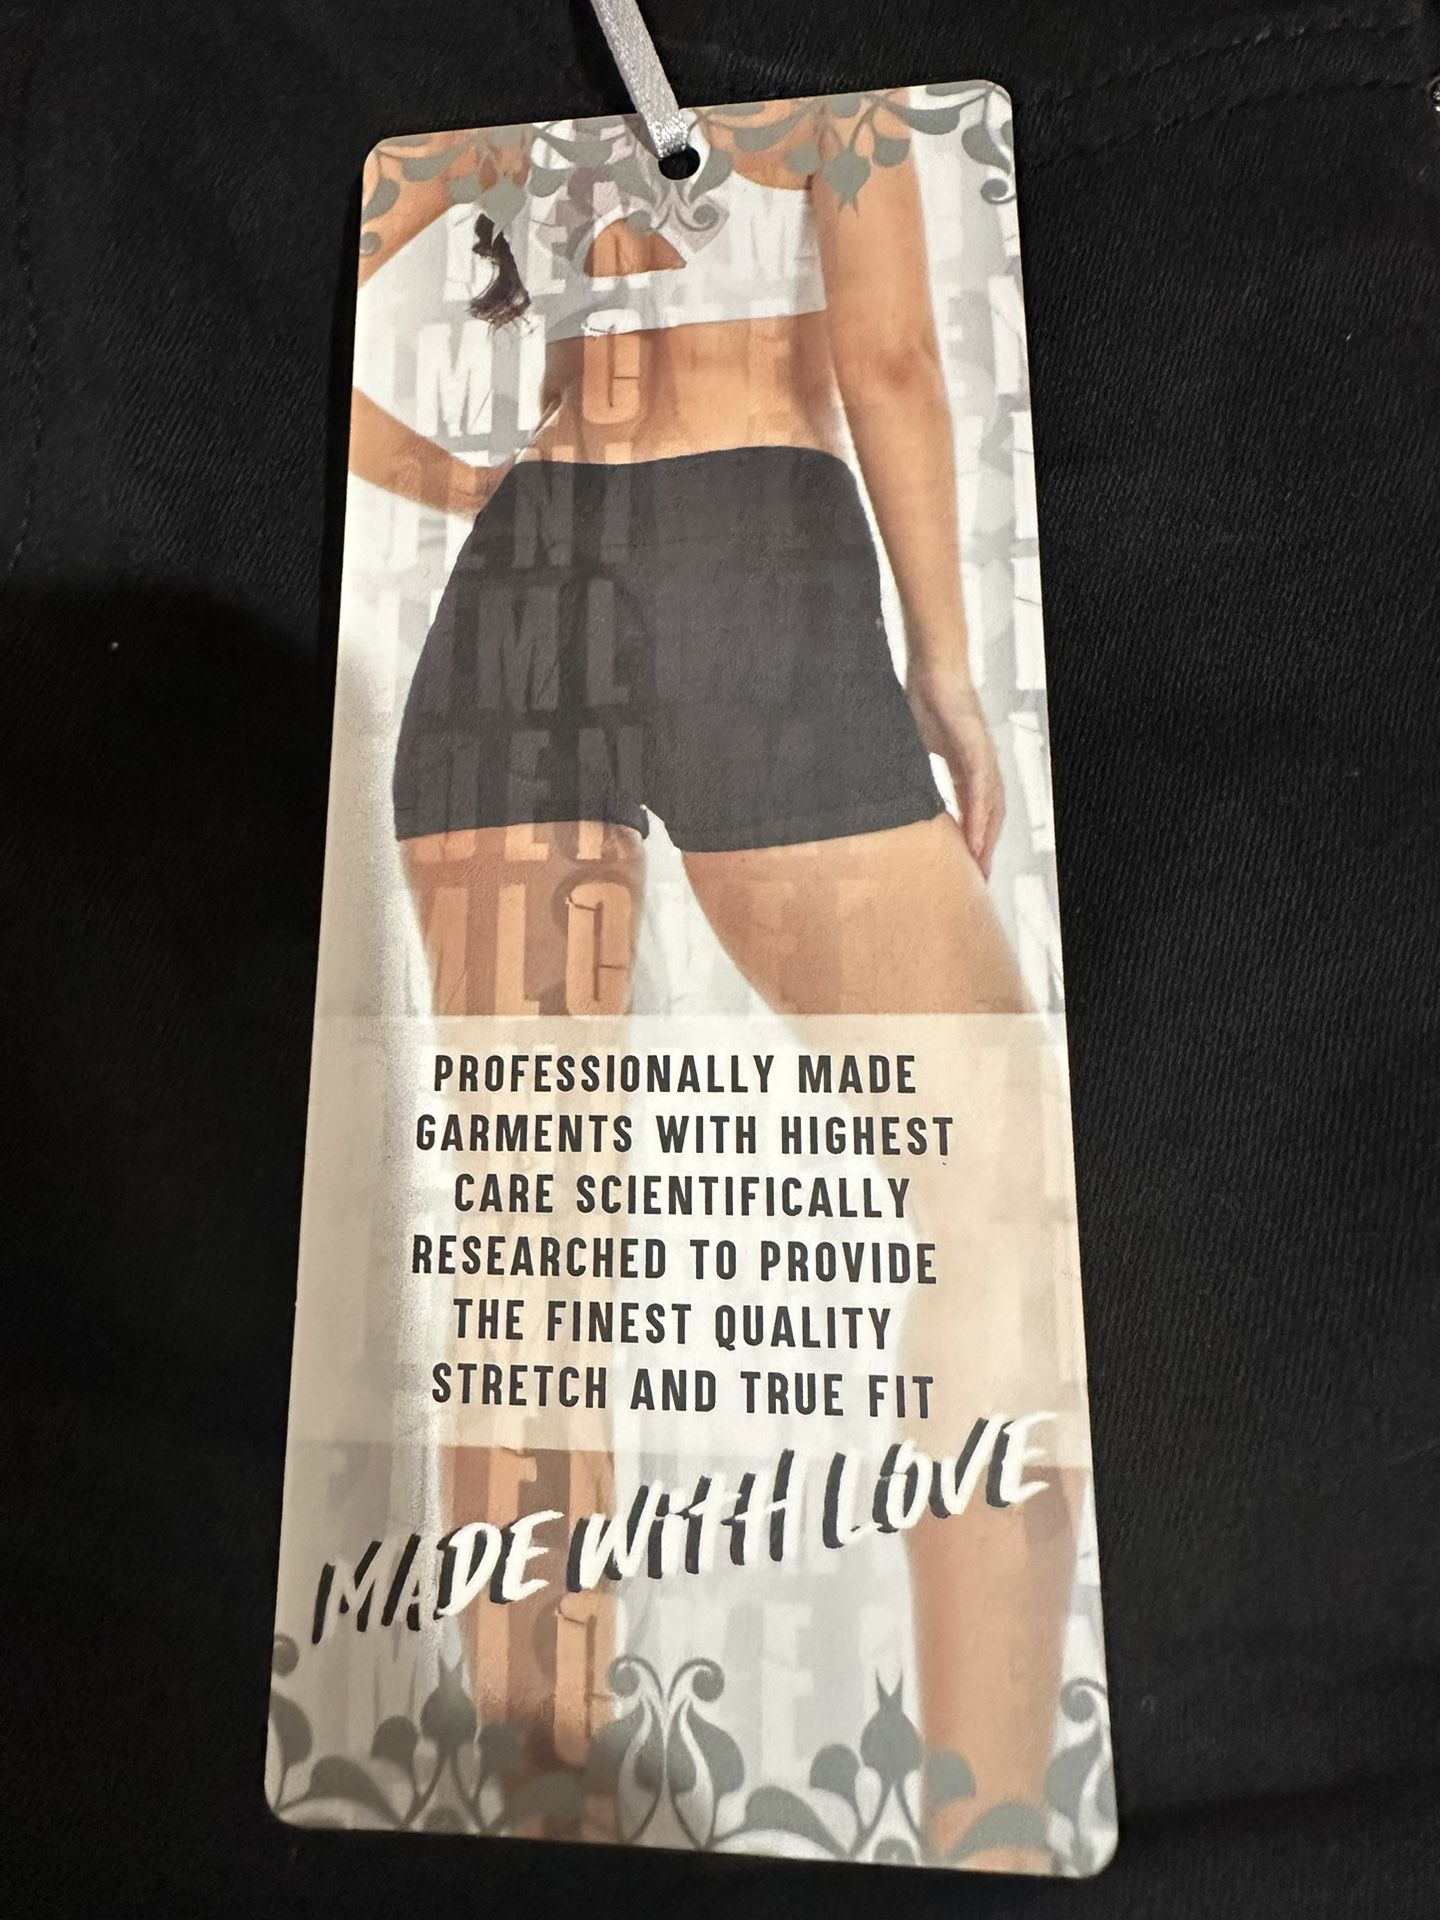 Women Booty Shorts 